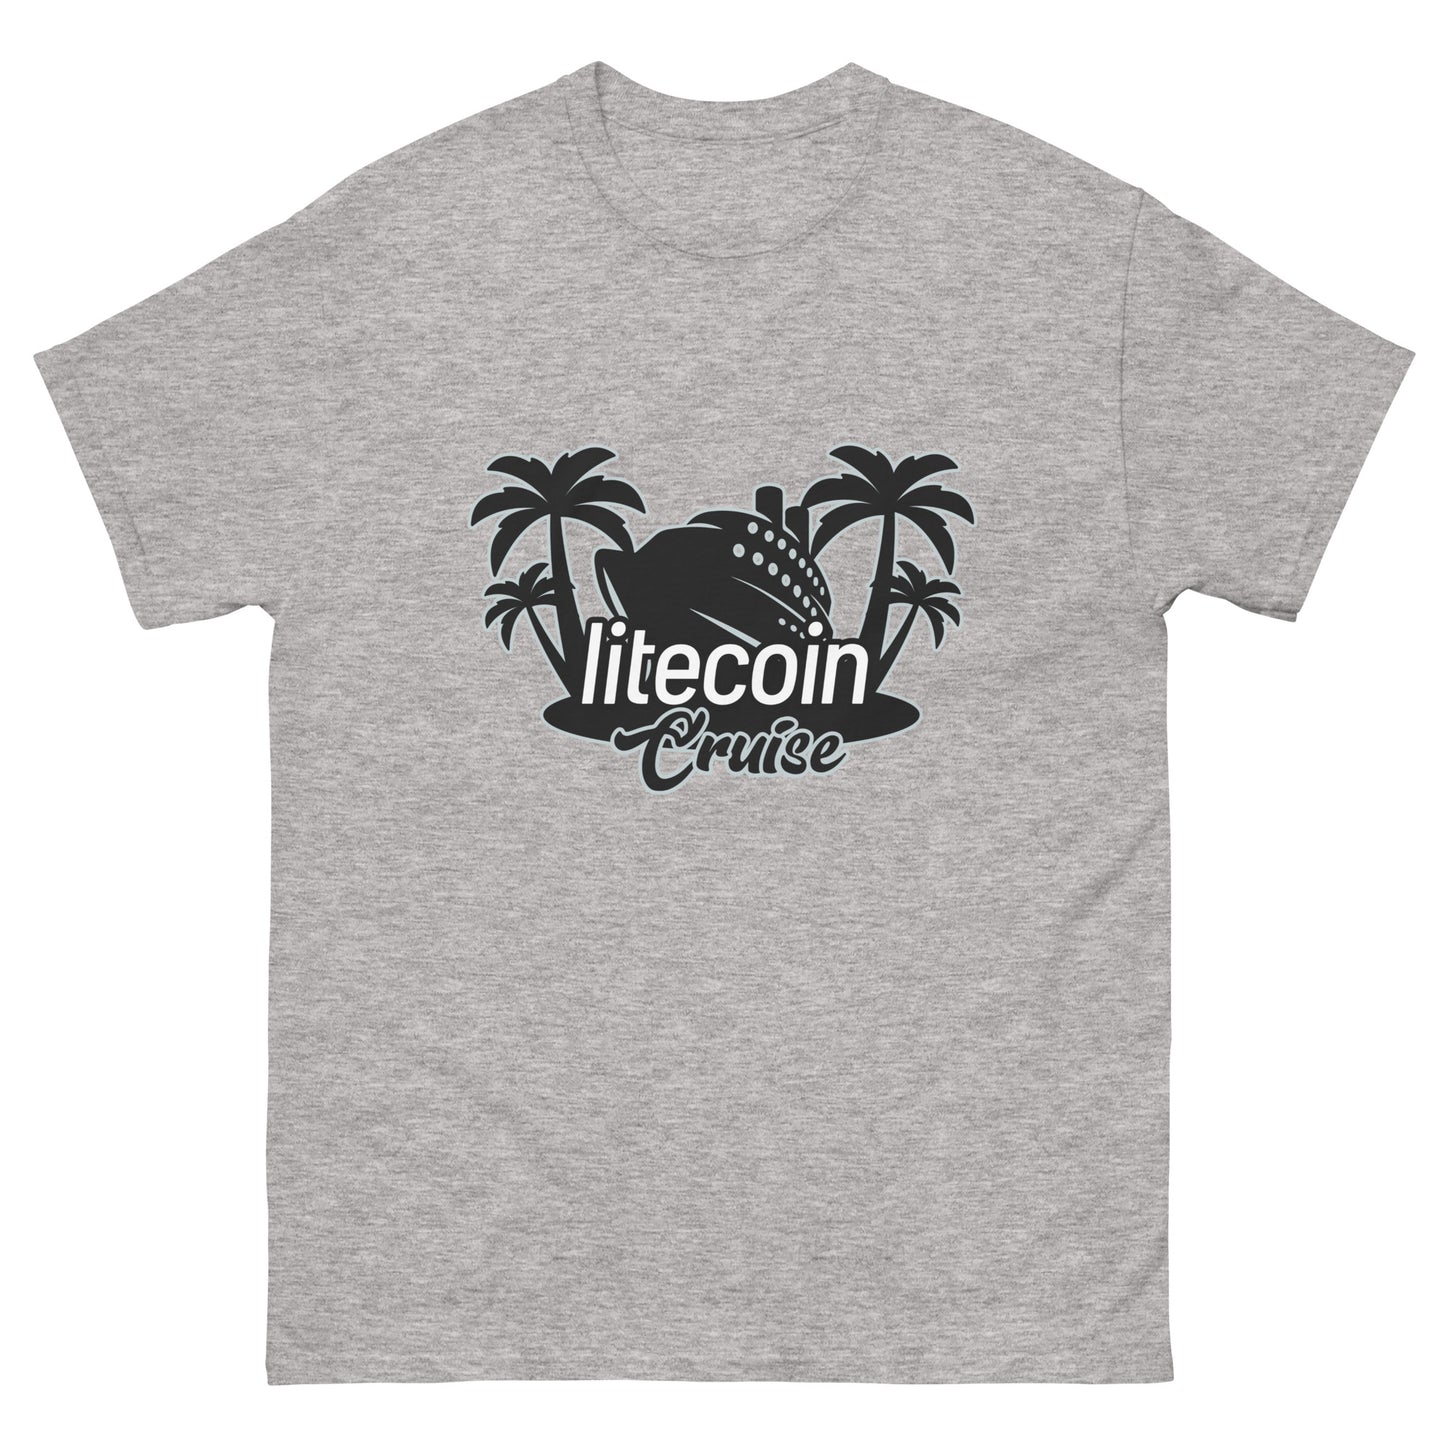 Litecoin Cruise T-shirt